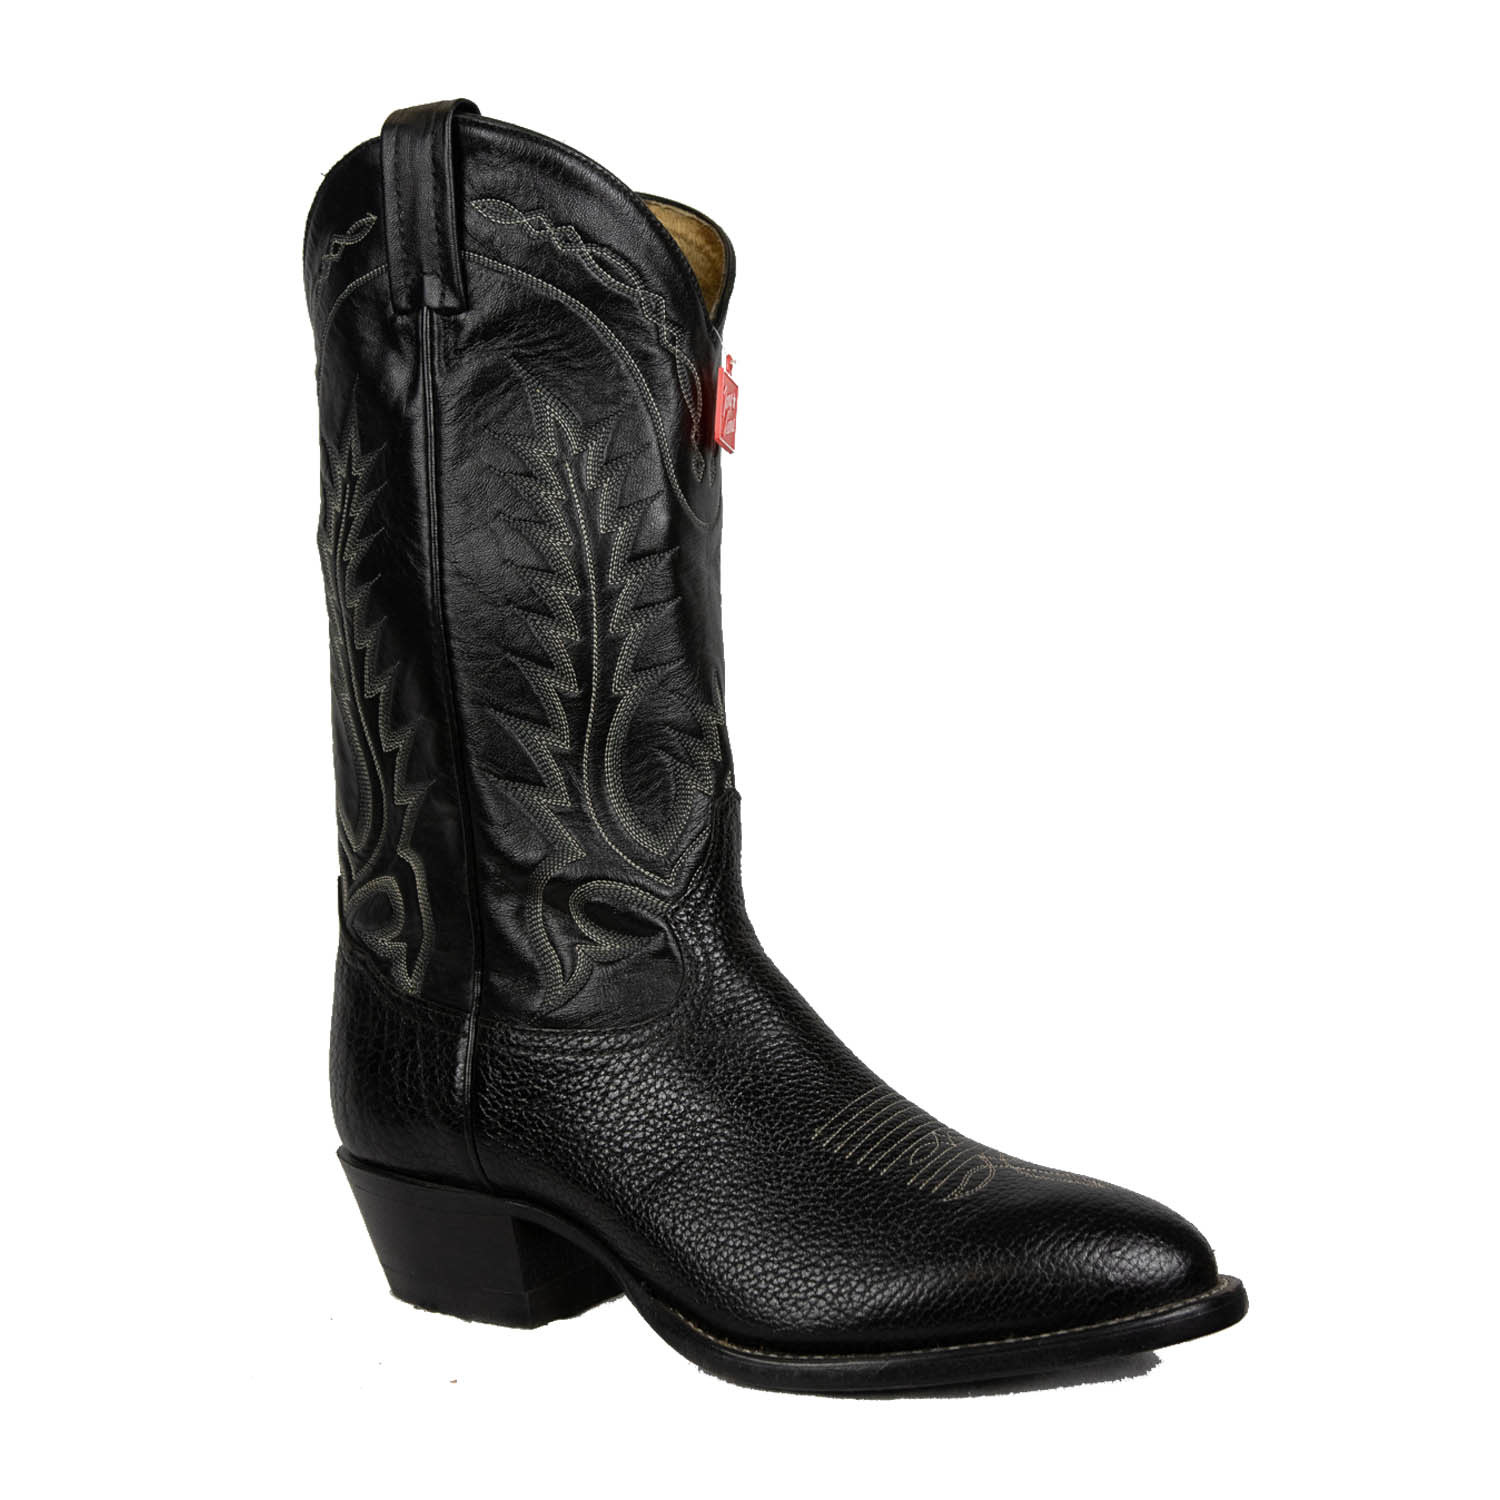 Tony Lama Men’s Cowboy Boot Black Western Heel Leather Sole Rounded ...